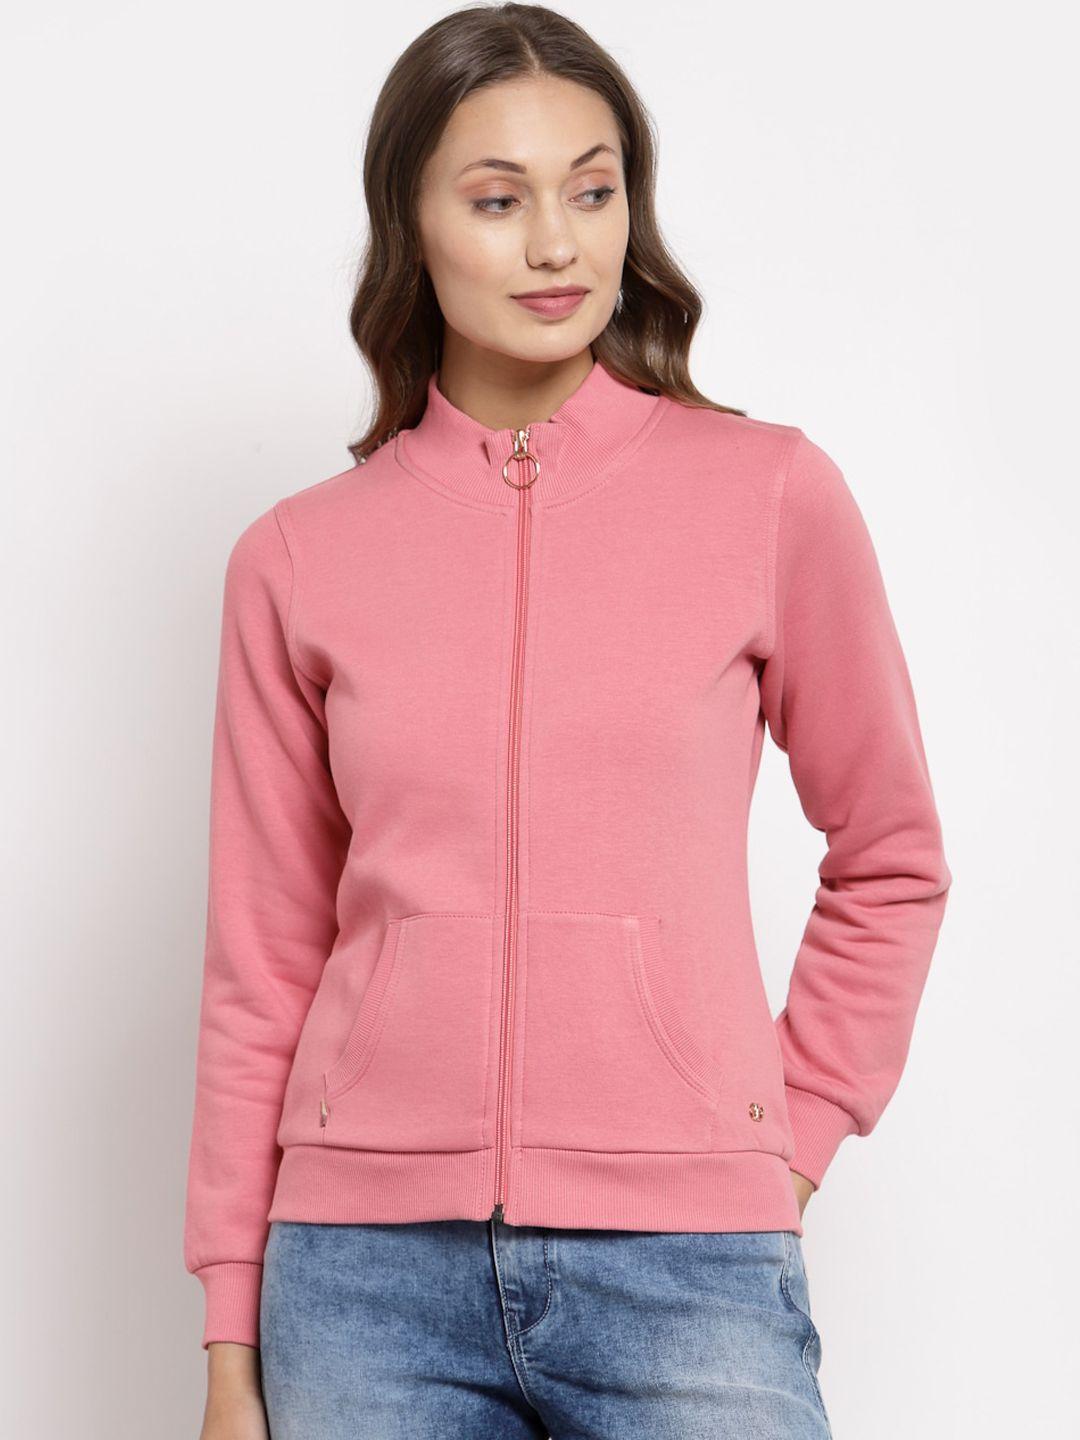 juelle-women-pink-sweatshirt